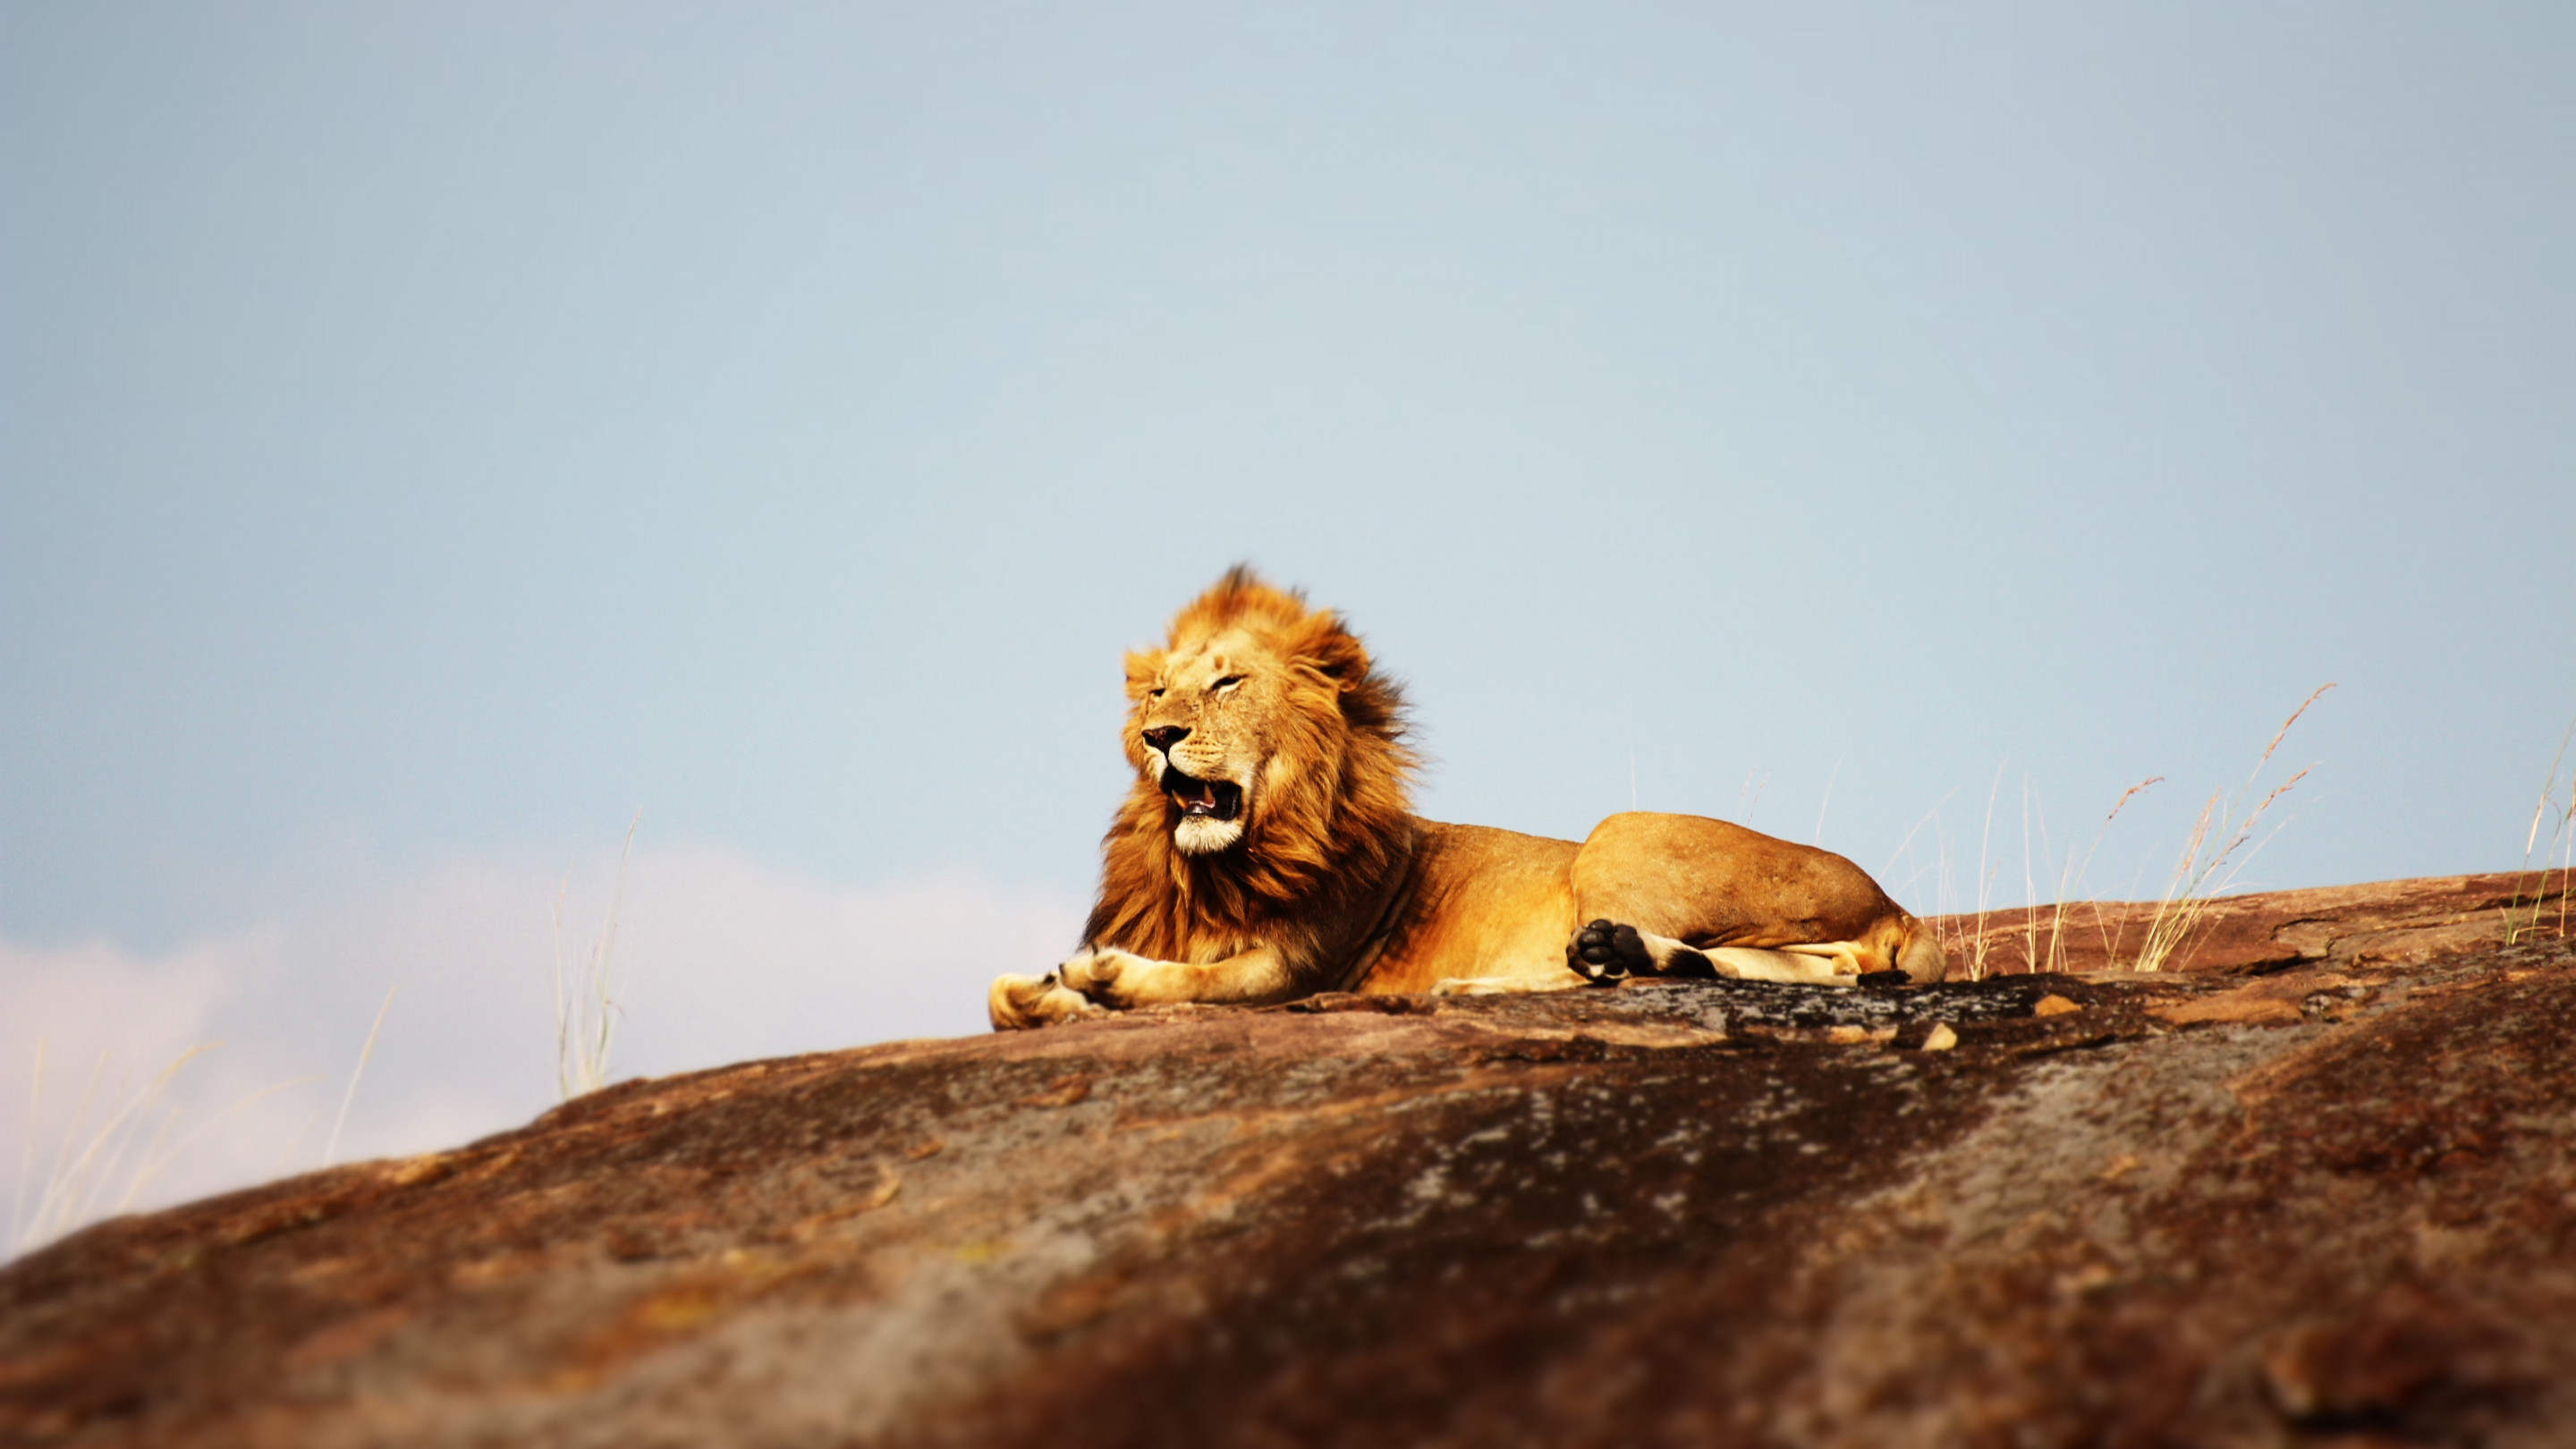 Lion in Serengeti National Park wallpaper 2880x1620